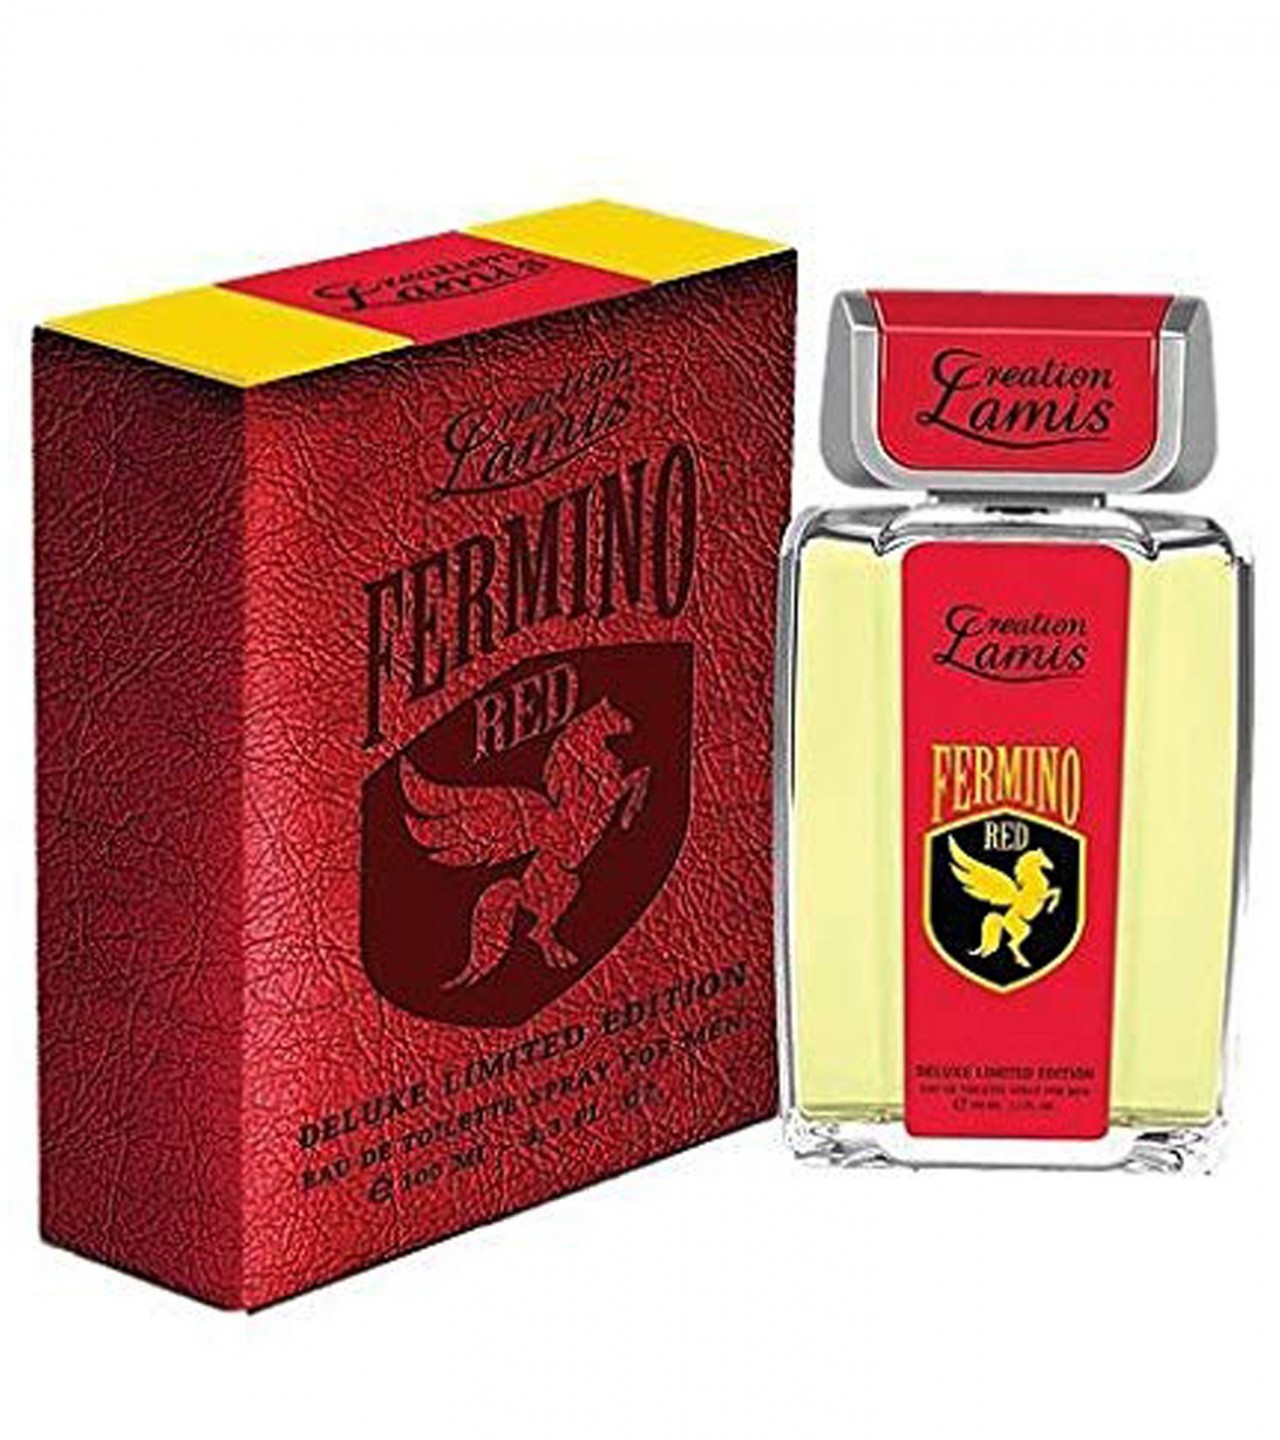 Creation Lamis Fermino Perfume For Men - 100 ml - Red